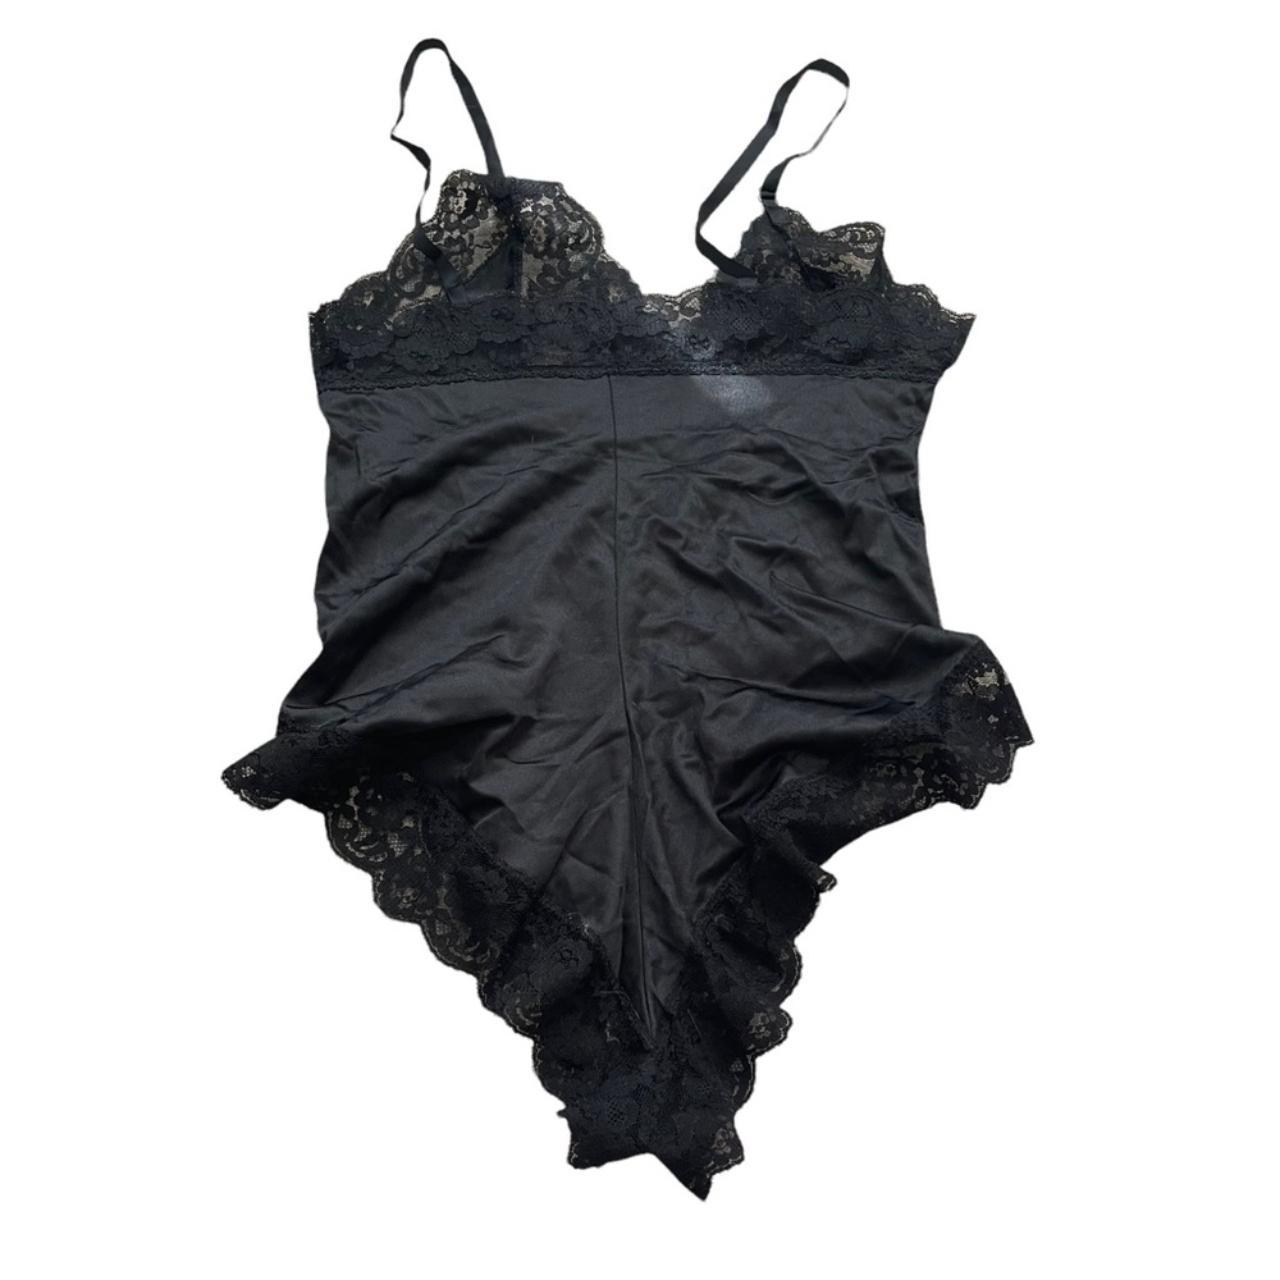 Vintage Black Satin Lace Teddy Lingerie Bodysuit... - Depop